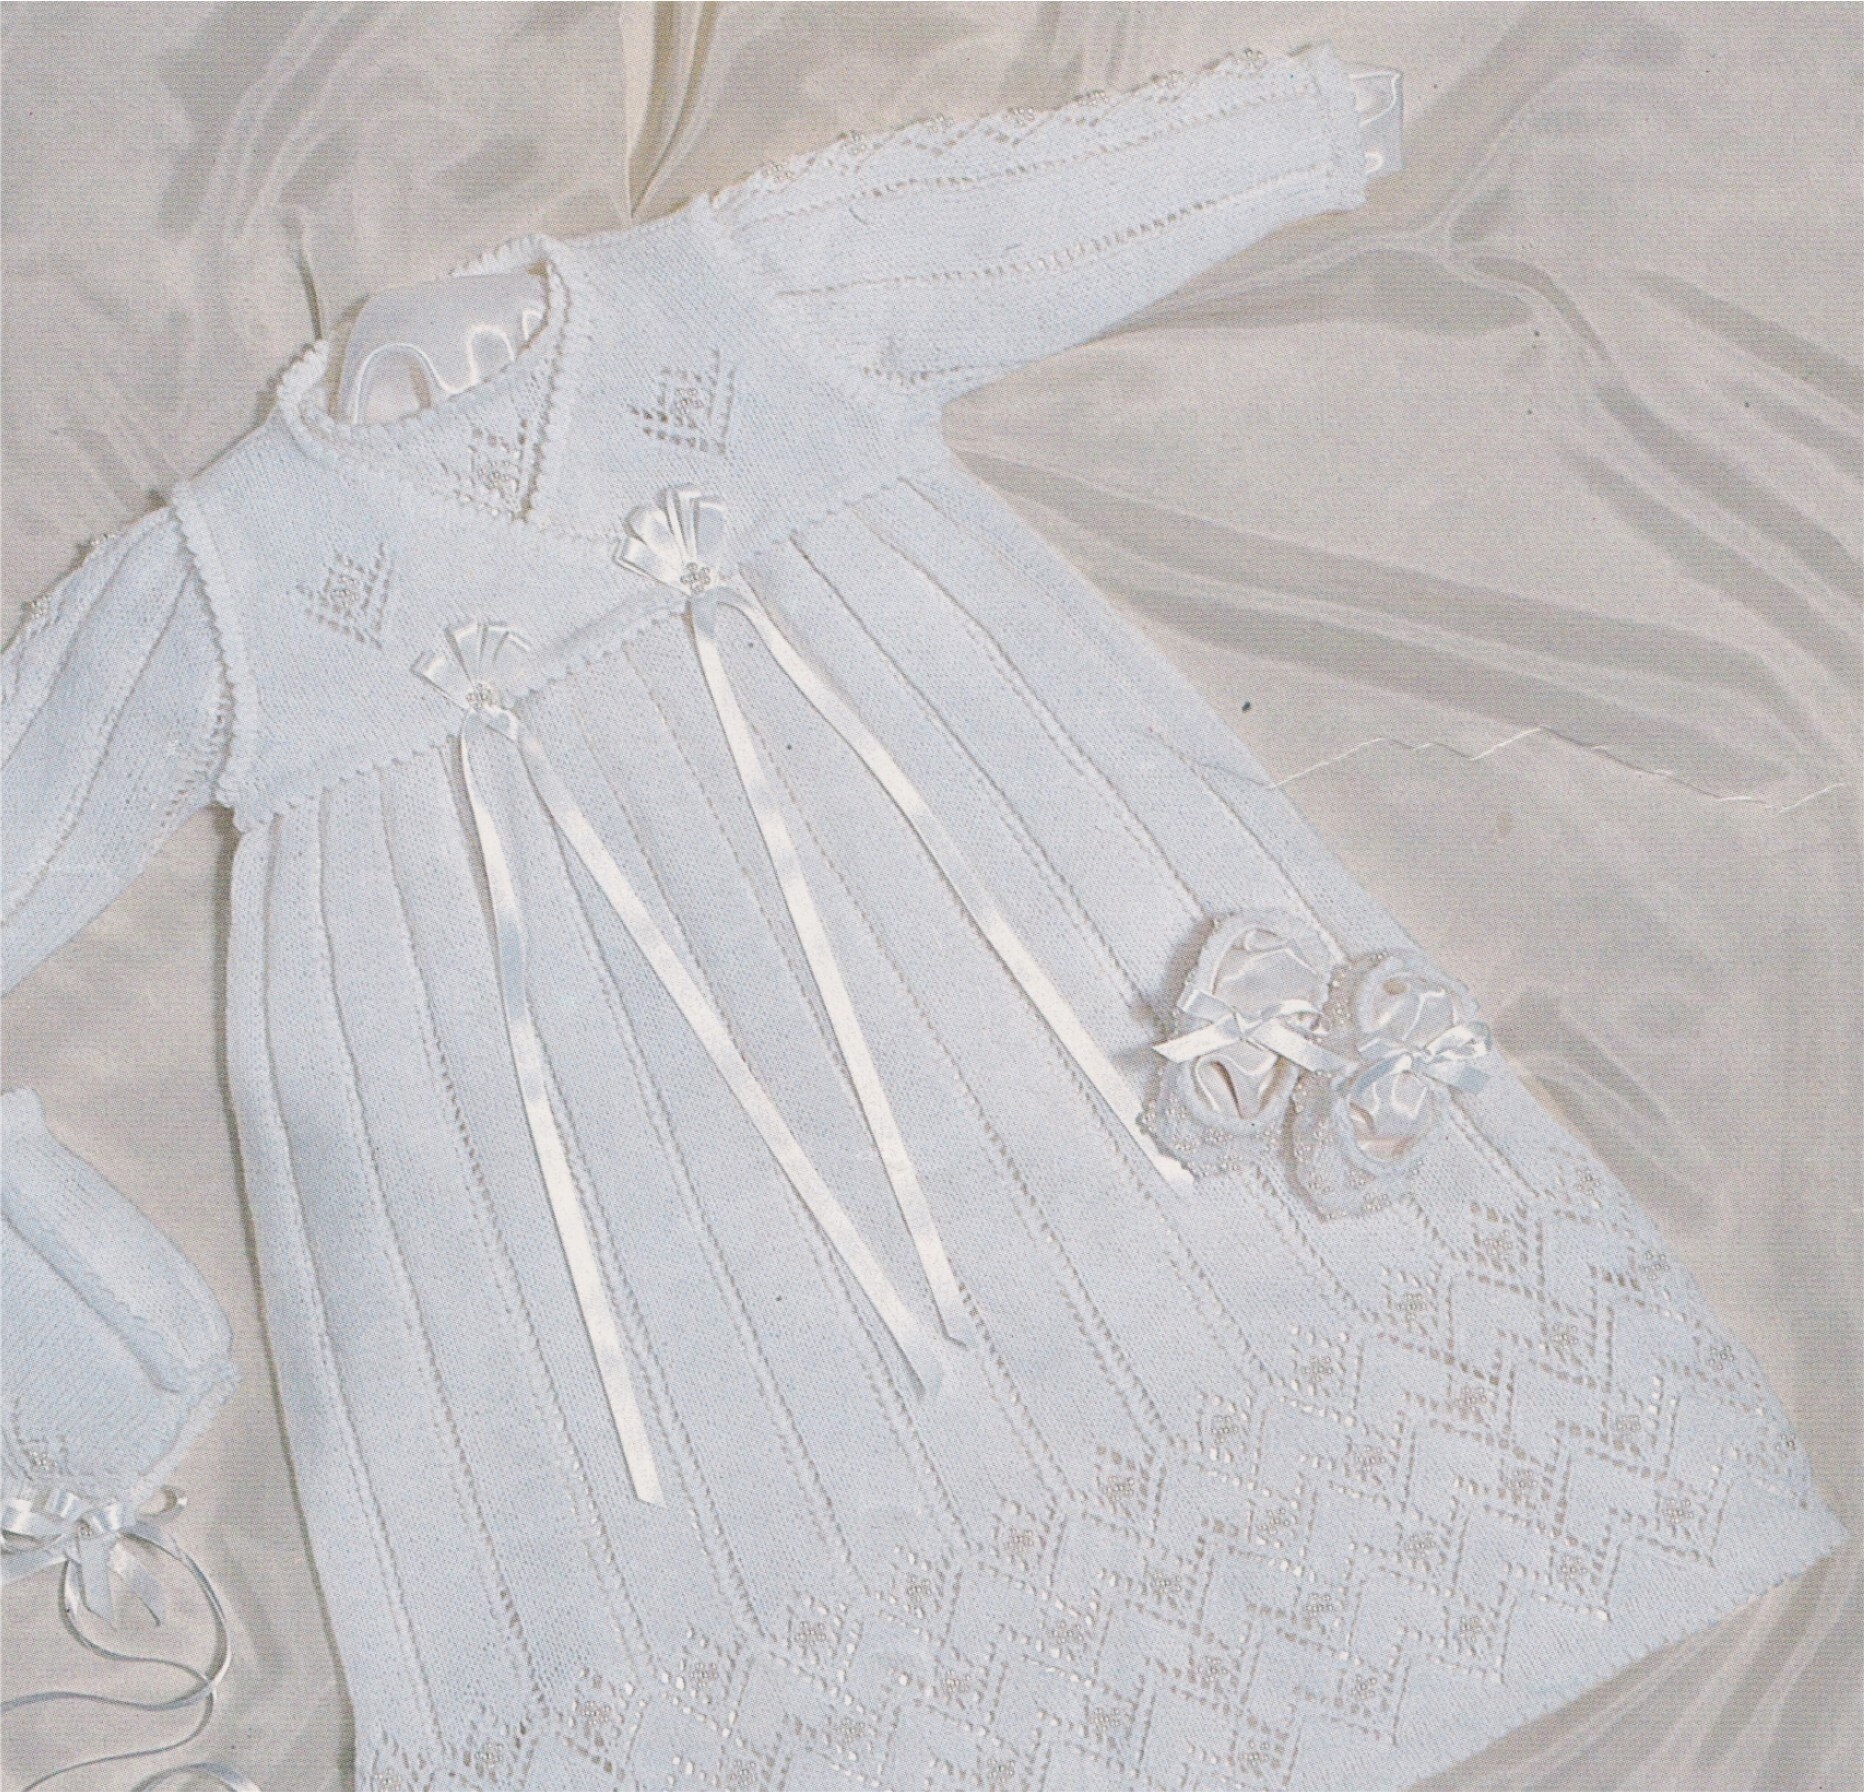 Babies Knitted Dress Pattern | ChicVintagePatterns